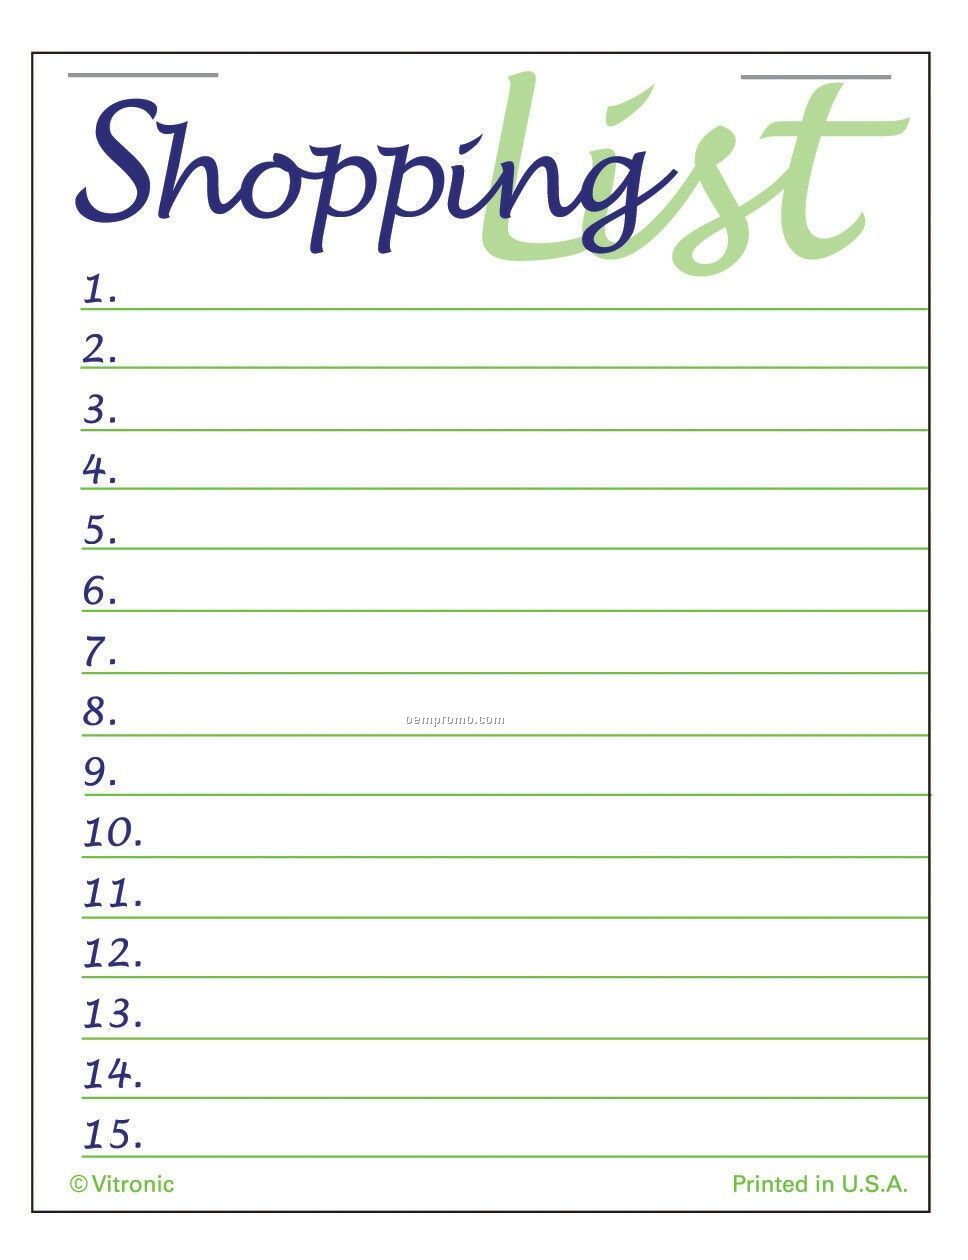 Shopping List Press-n-stick Pads (After 8/1/11)